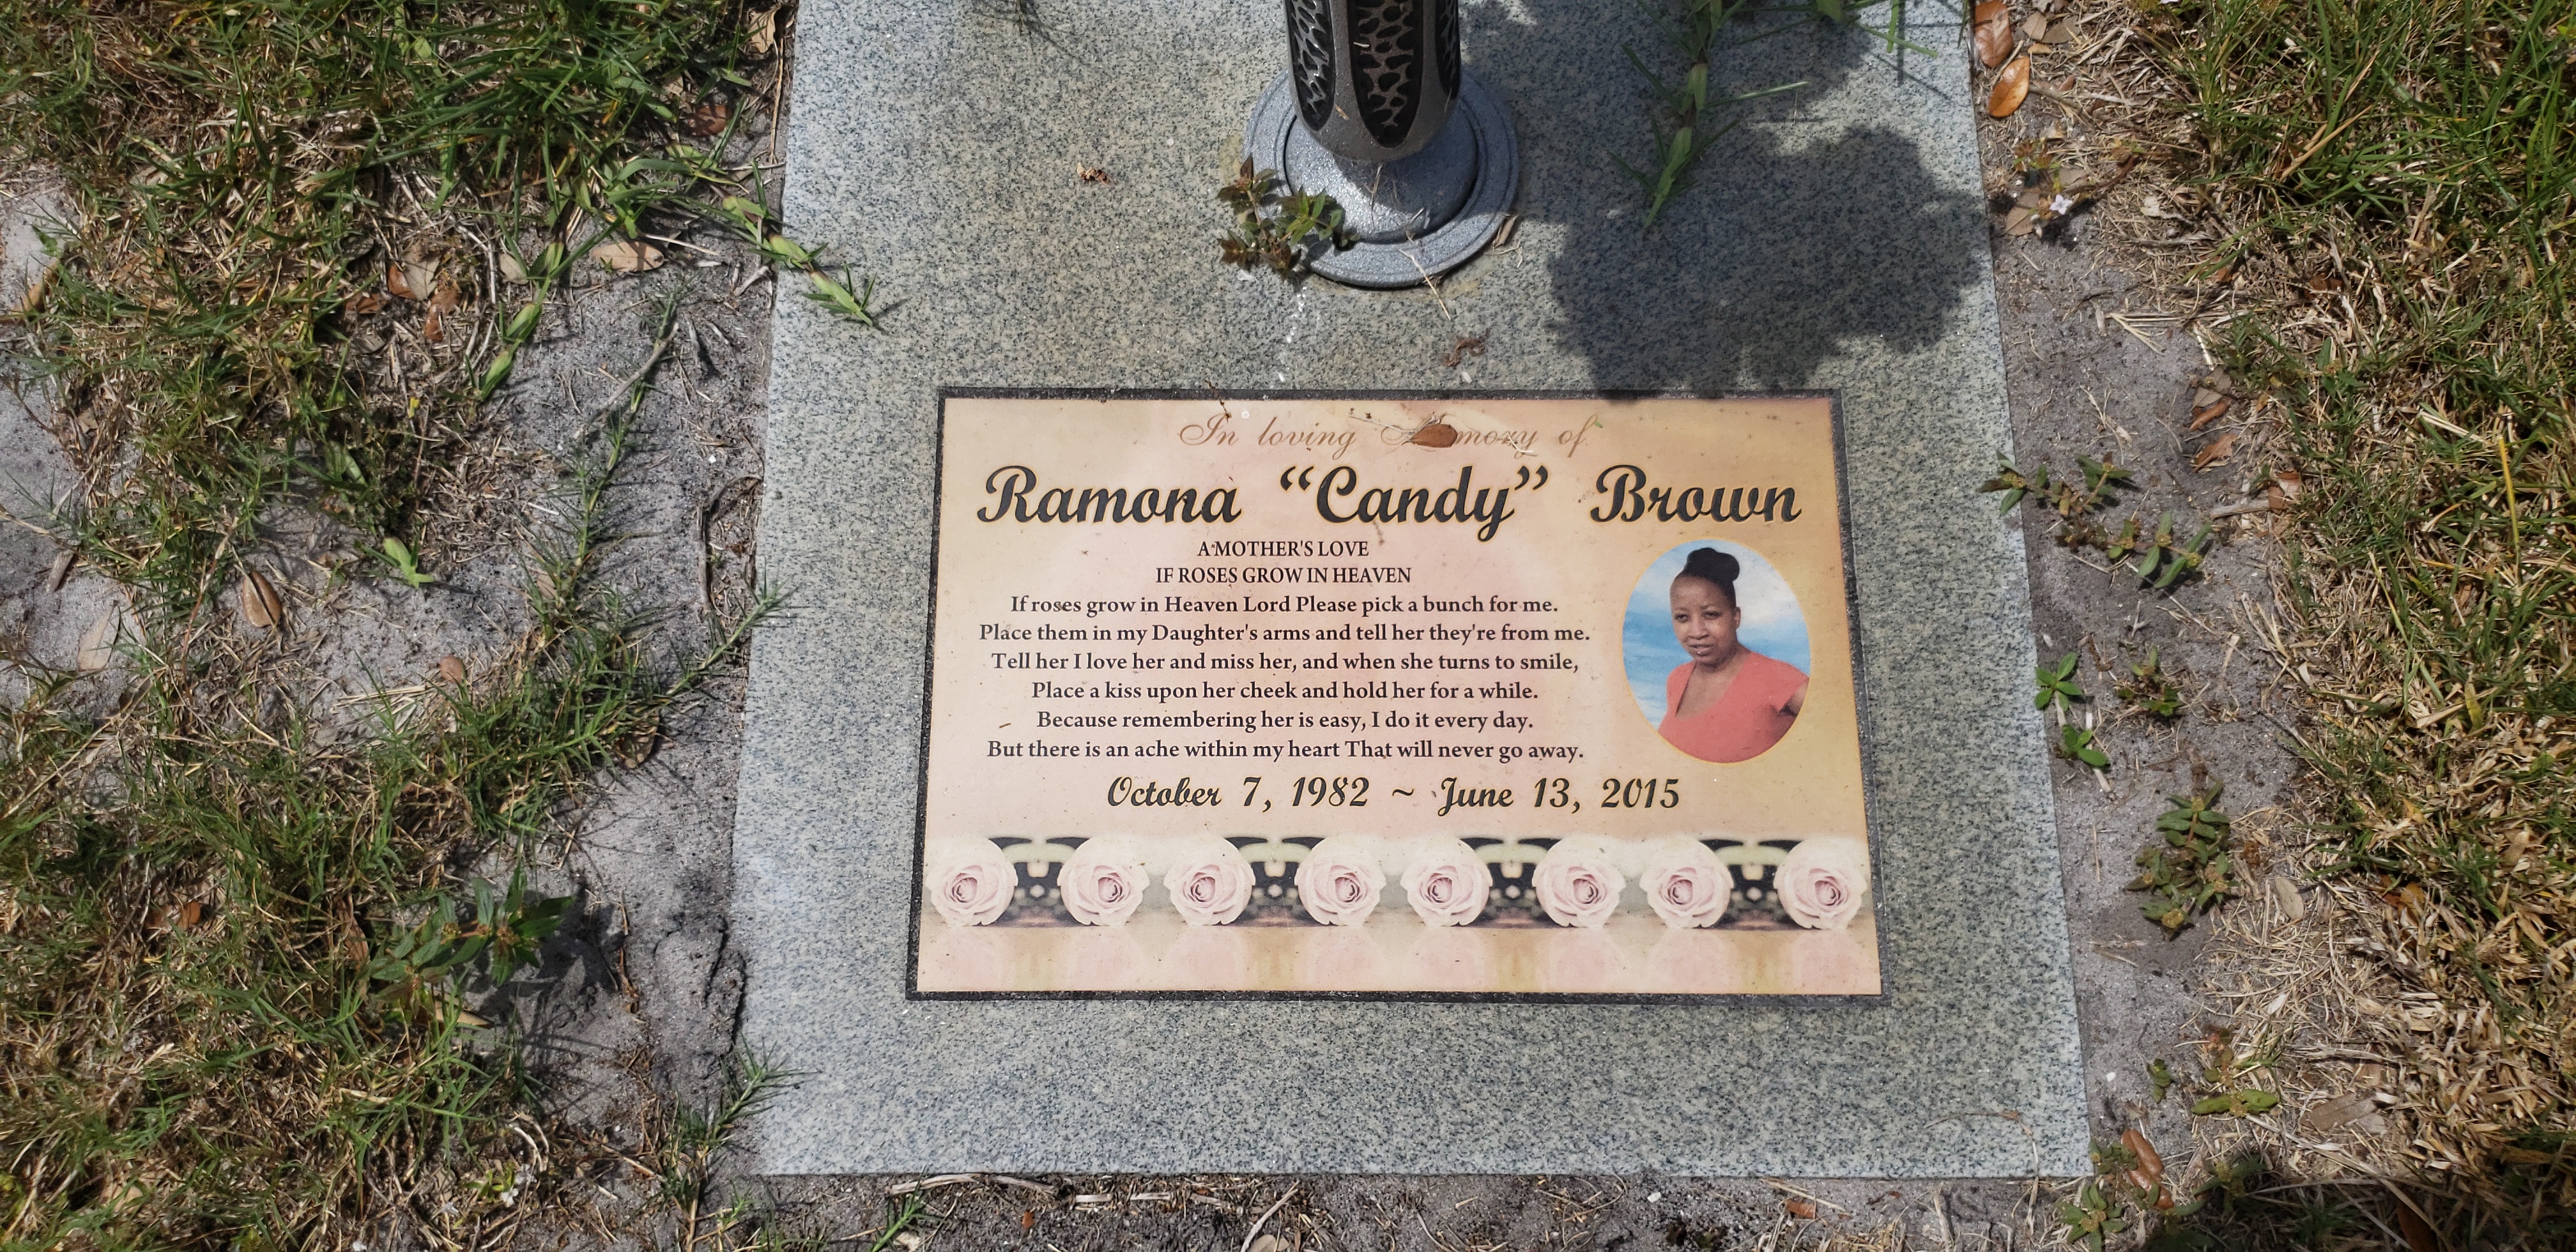 Ramona "Candy" Brown